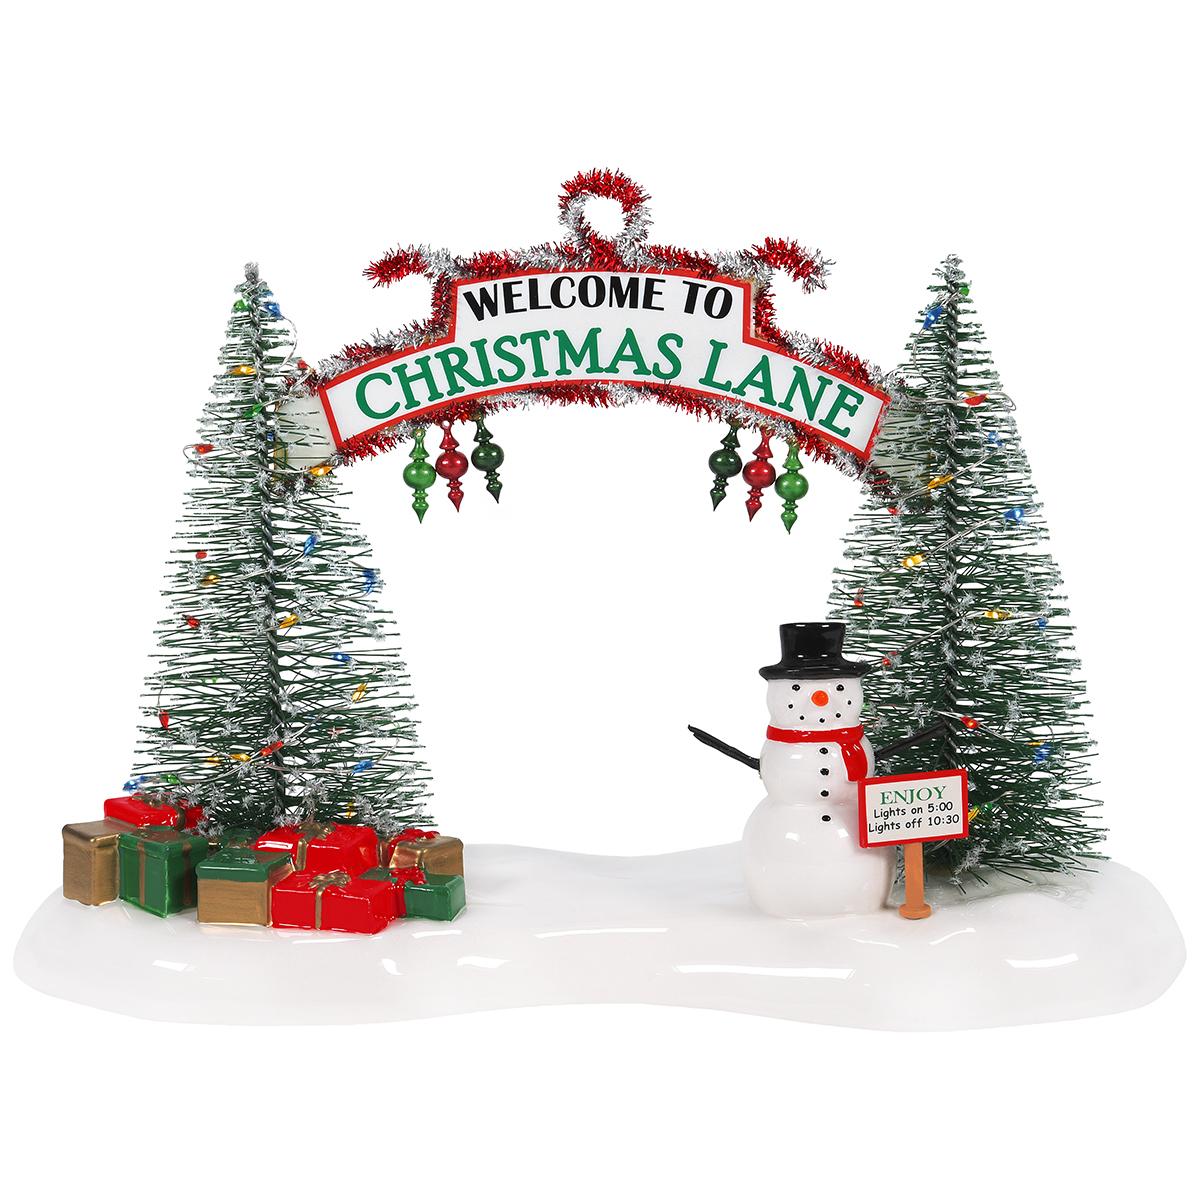 A Festive Christmas Gate